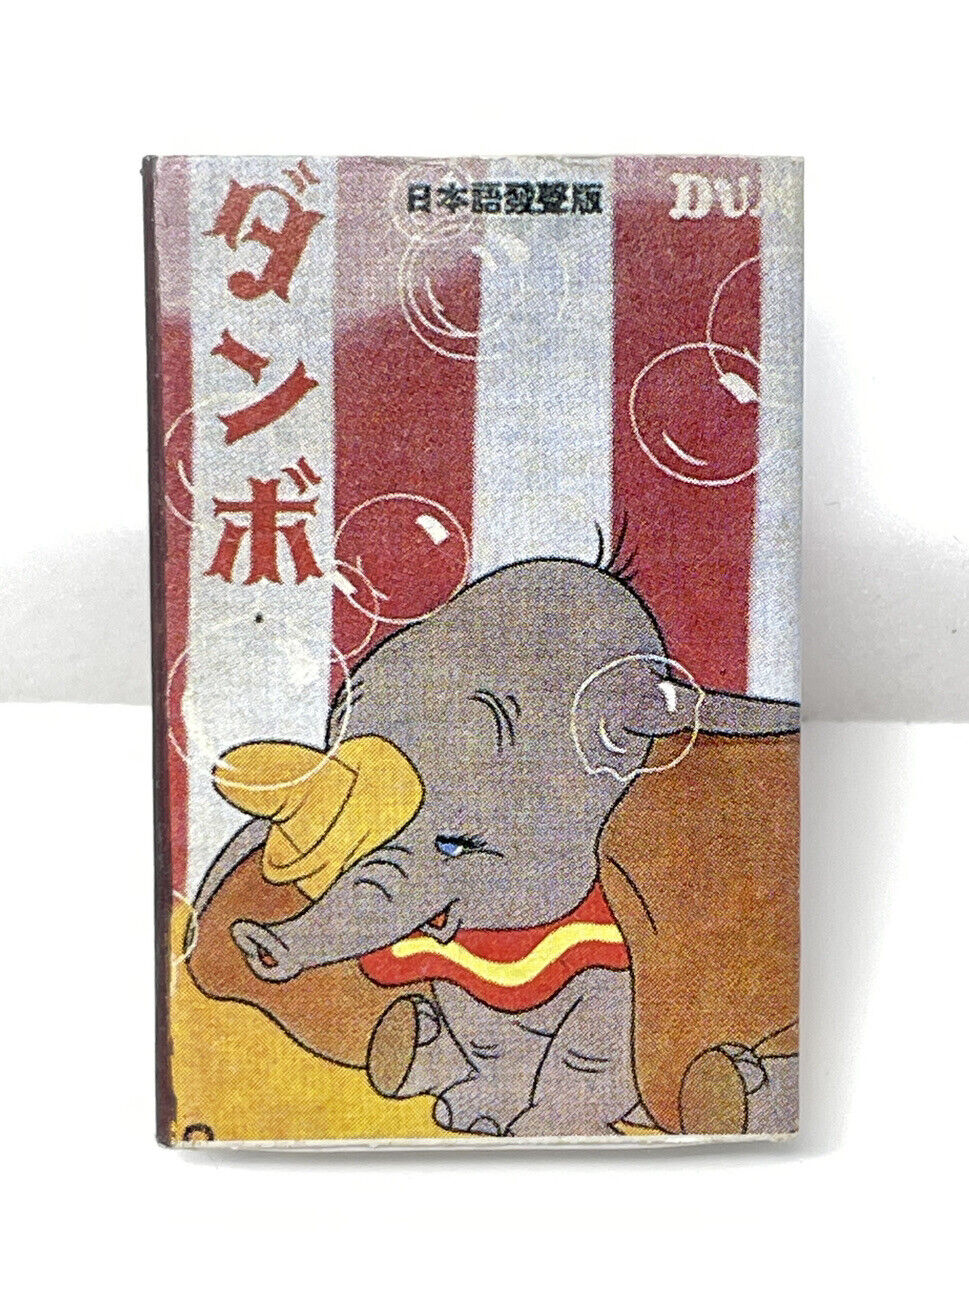 Super Rare 1950s Disney Japan Matchbox With Matches